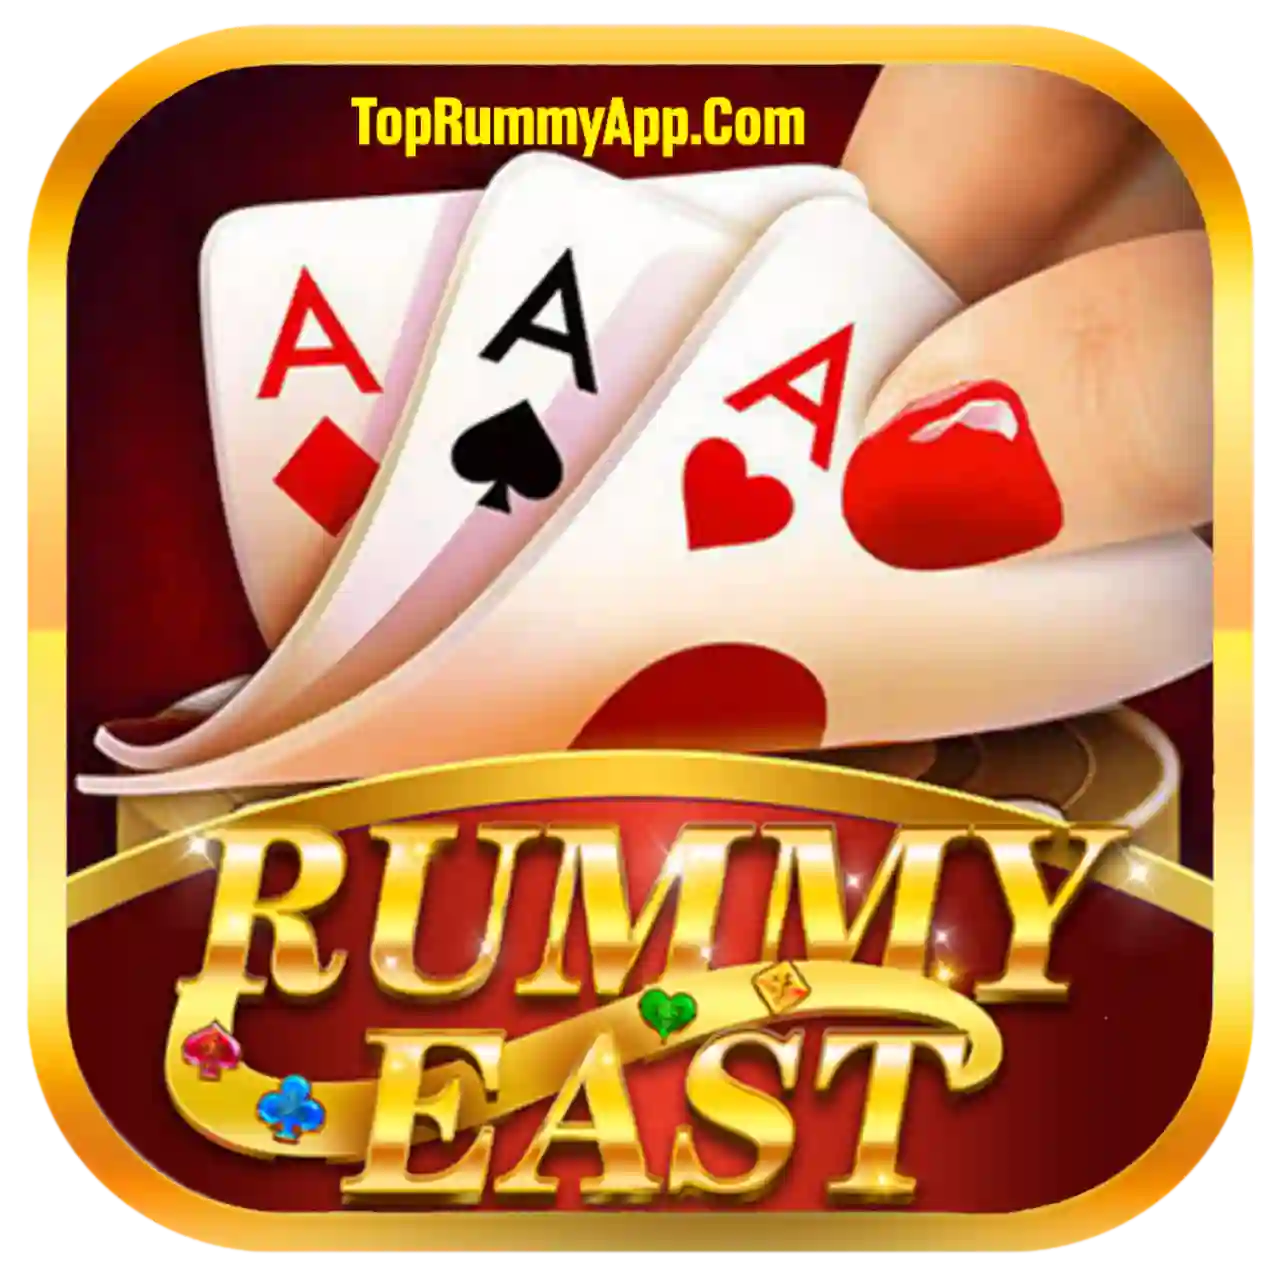 Rummy East Apk Download - Top 20 Rummy Apps List